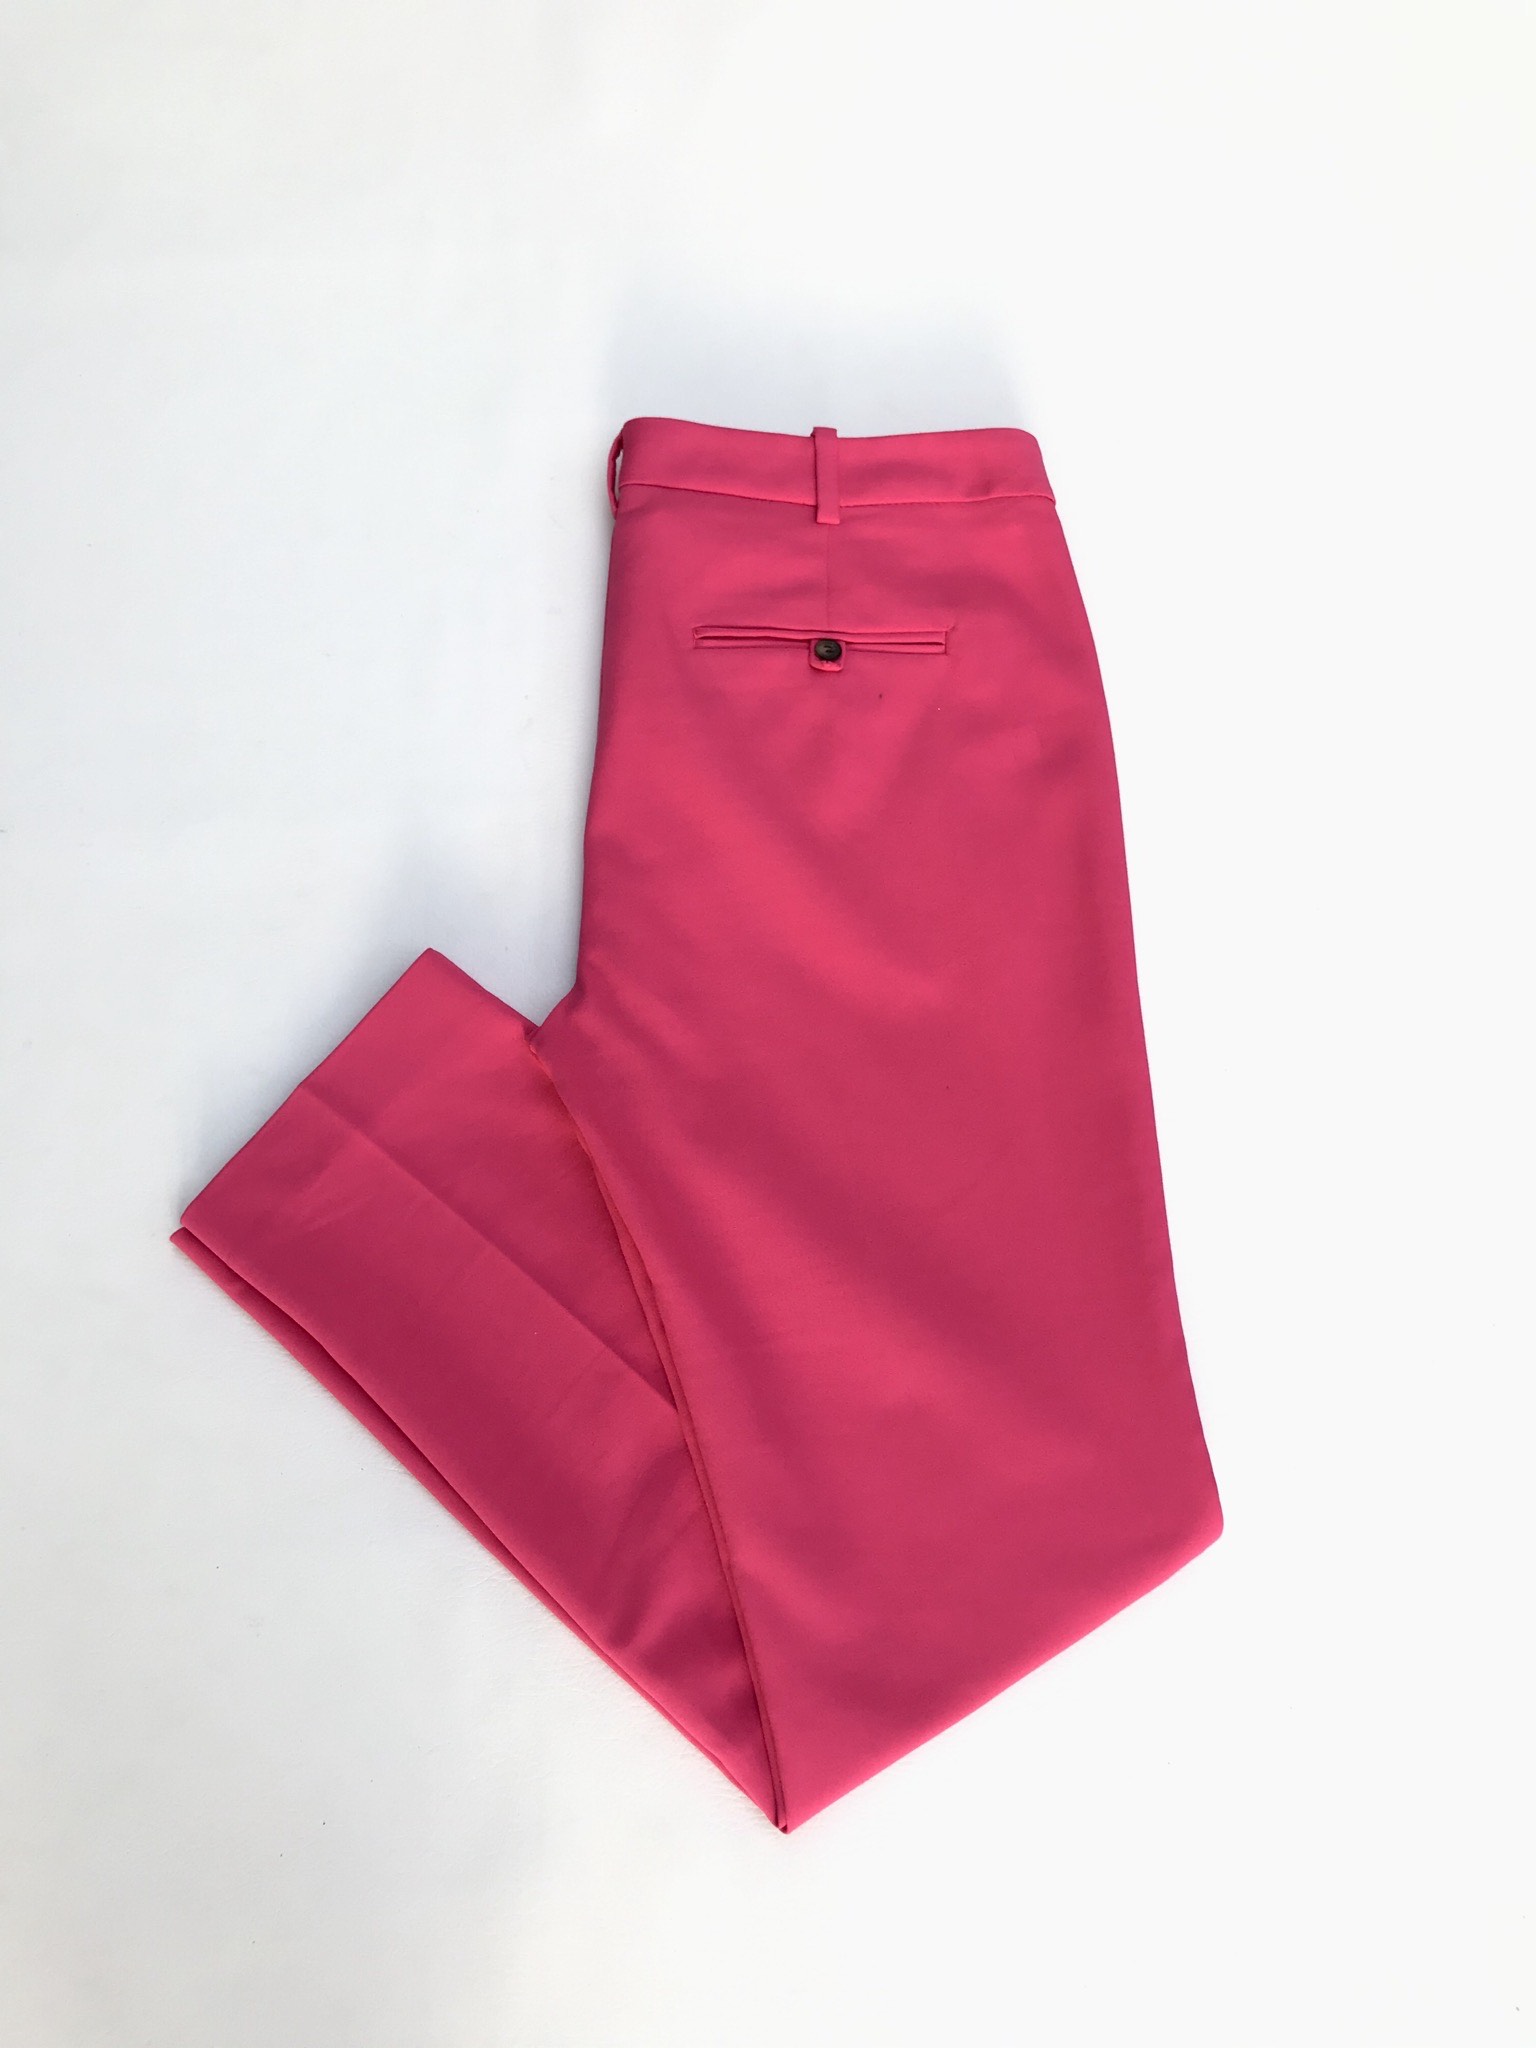 Pantalón Zara fucsia tela tipo sastre, 55% algodón con estructura, bolsillos laterales, corte slim. Precio original S/ 180